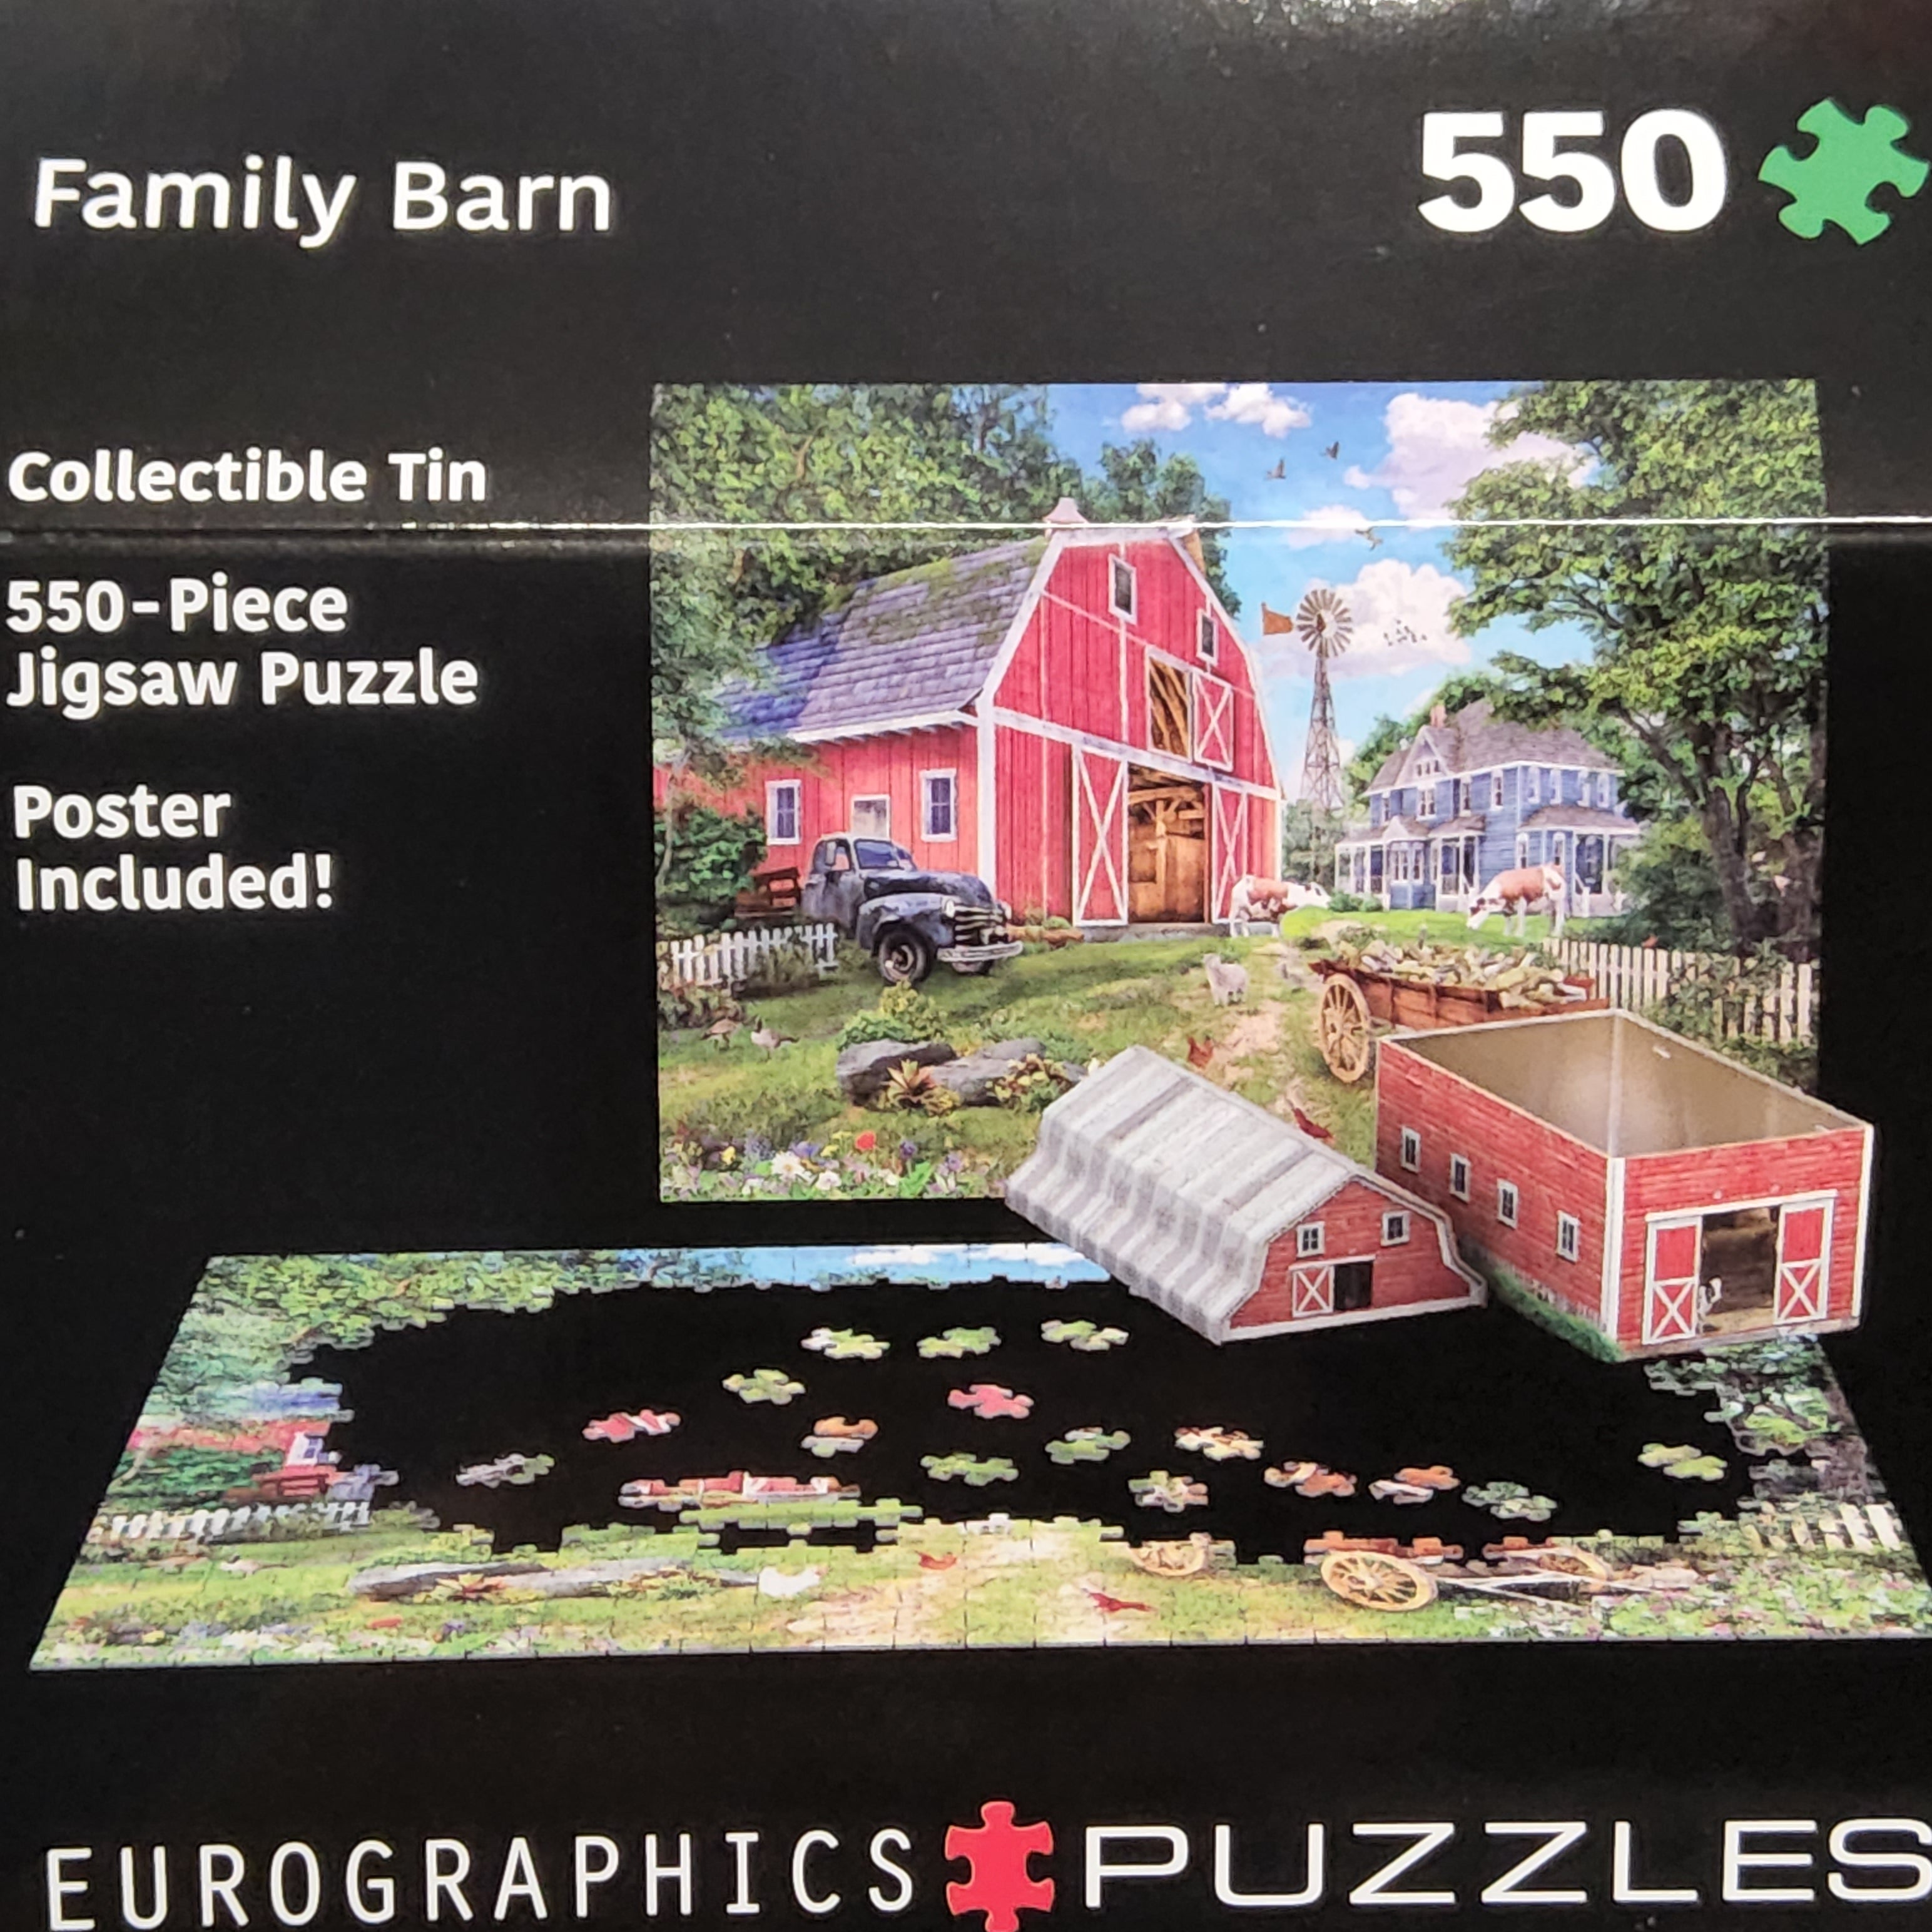 Eurographics Puzzle - Collectible Tin - Family Barn - 550 pieces - 8551-5601